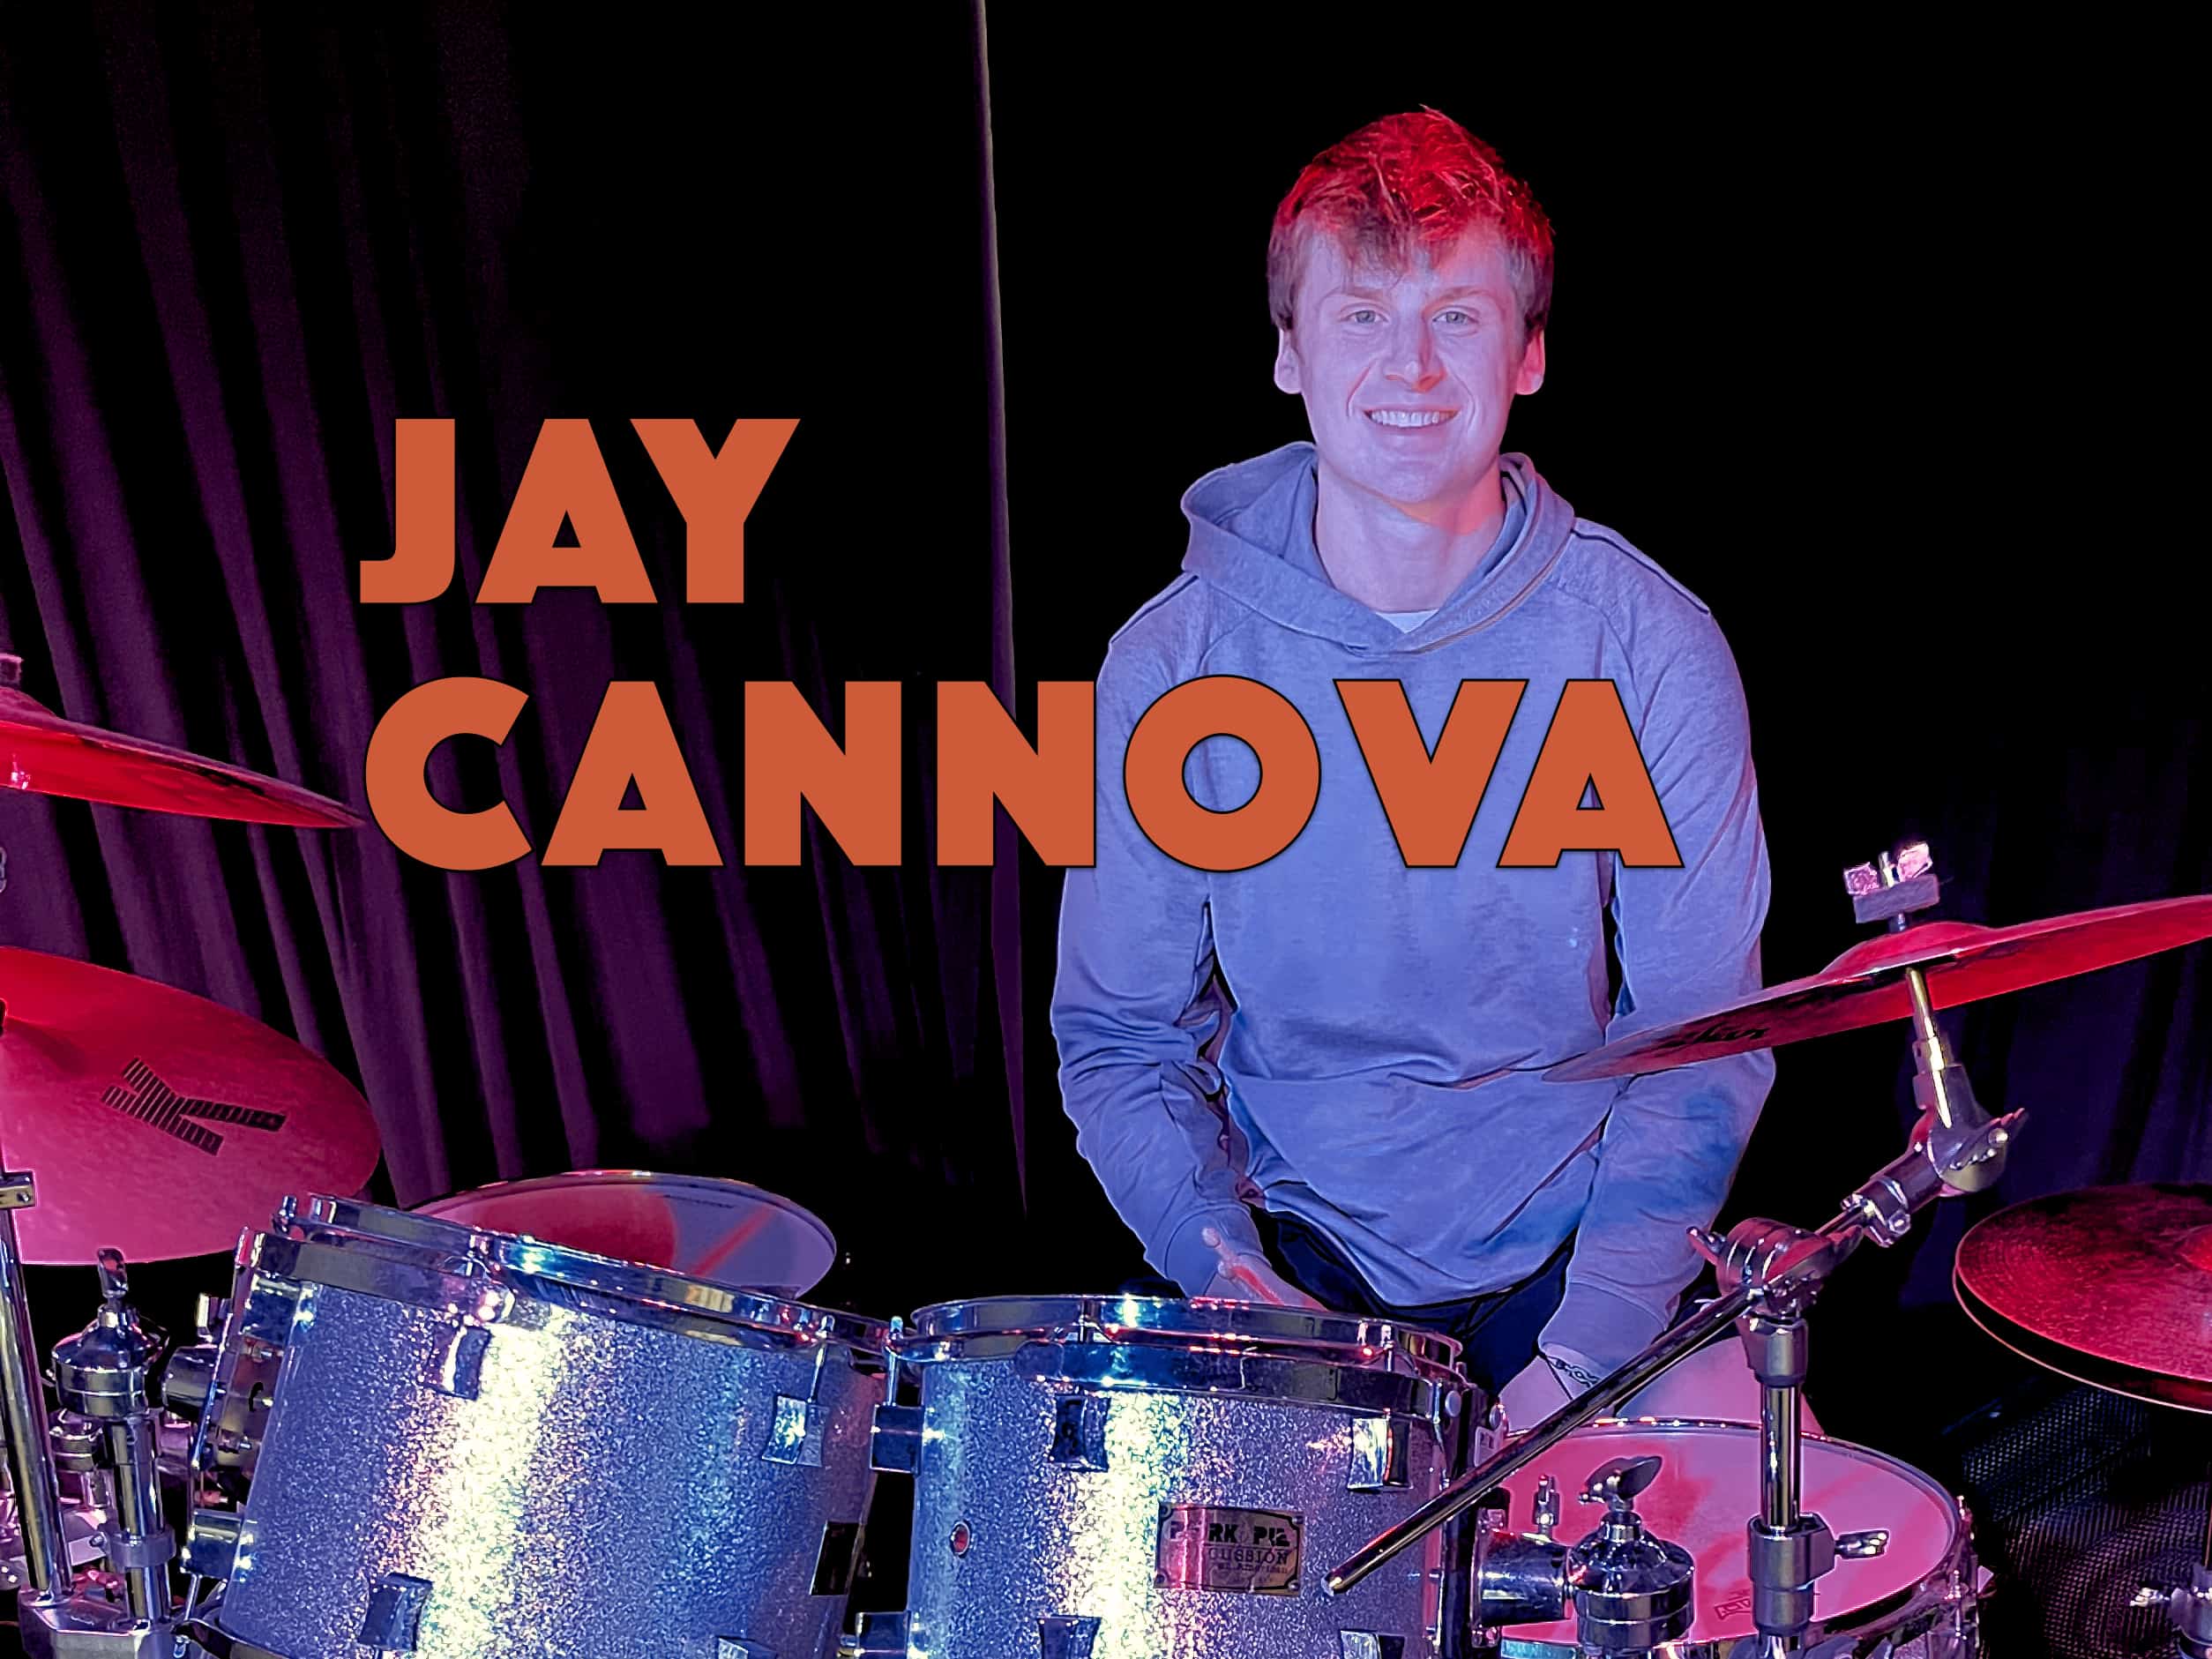 Drum student Jay Cannova